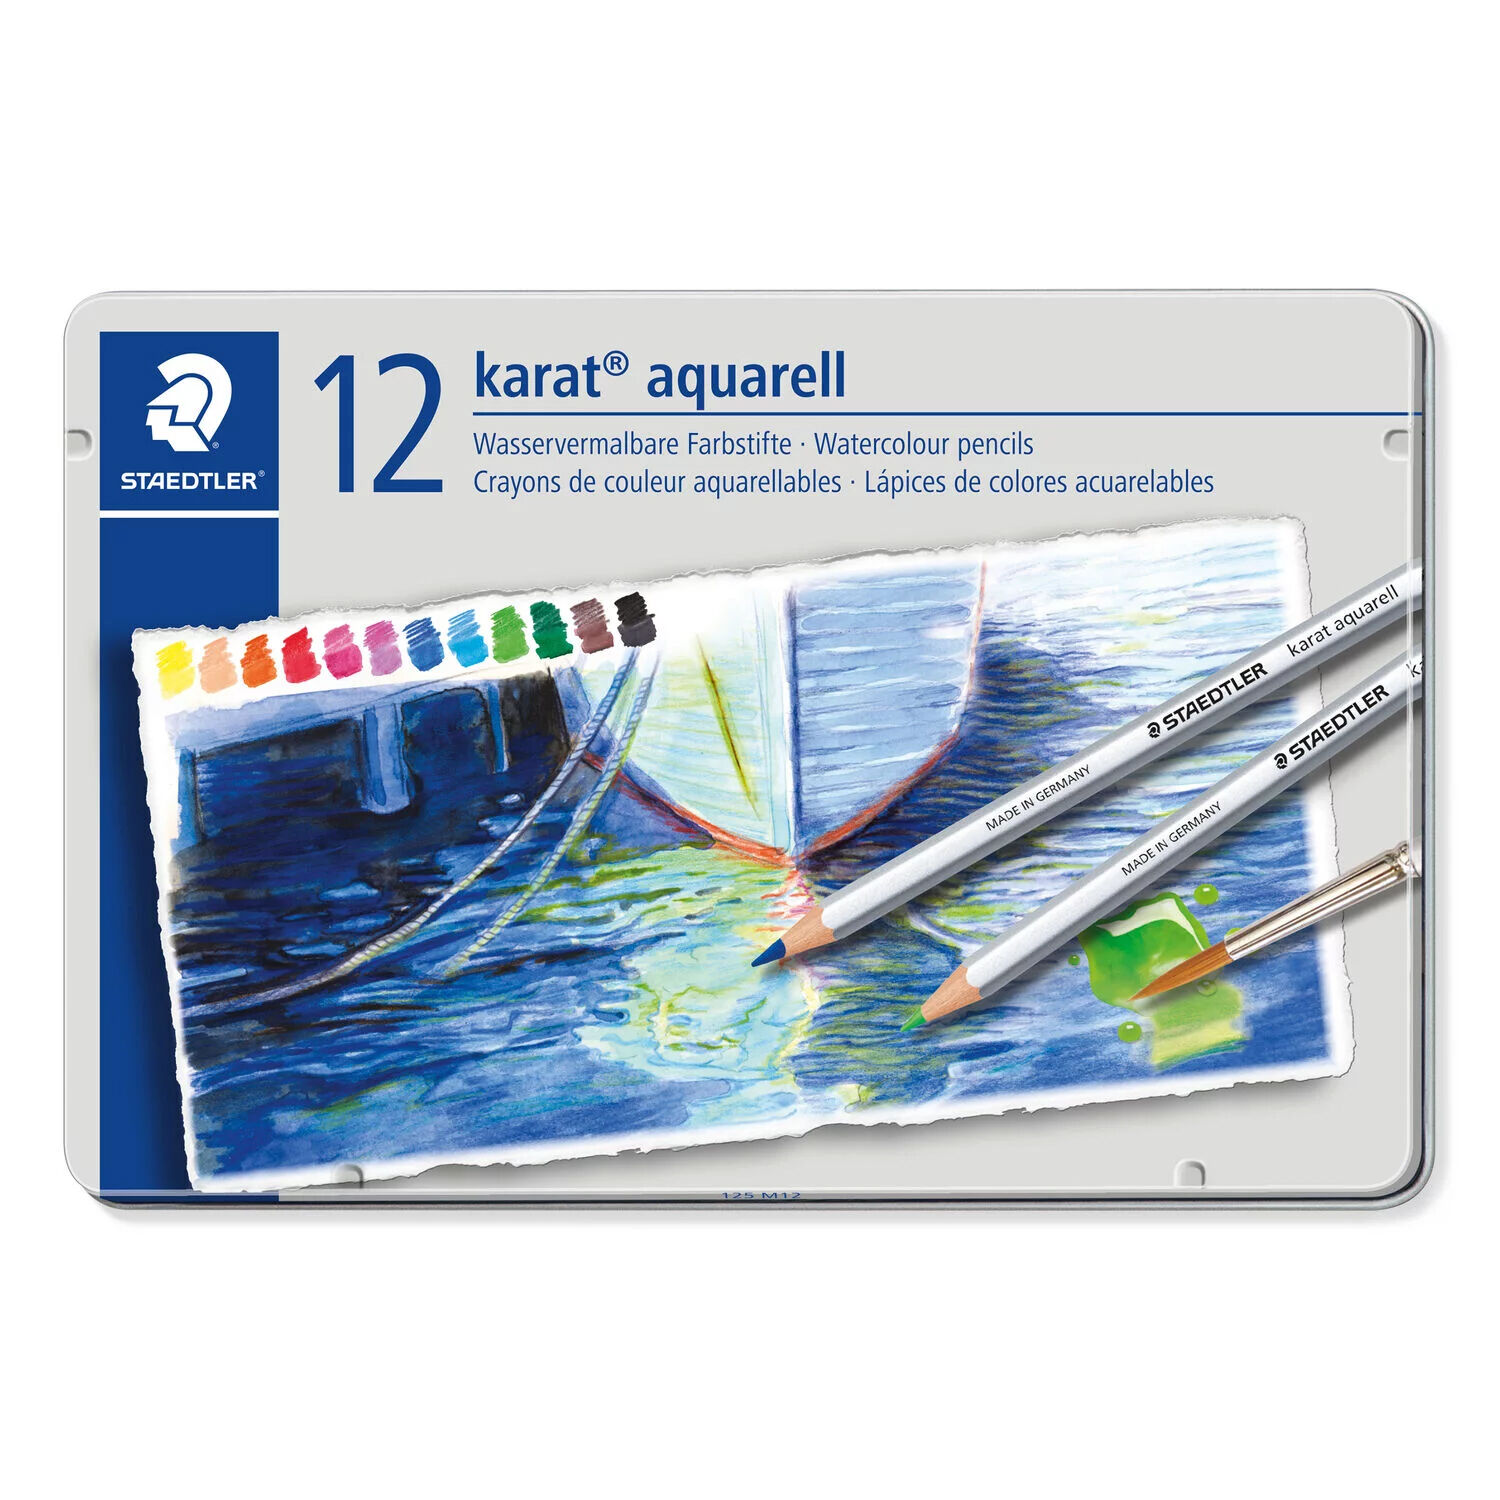 NEU Metalletui mit 12 Aquarellstiften Karat Aquarell 125 in sortierten Farben